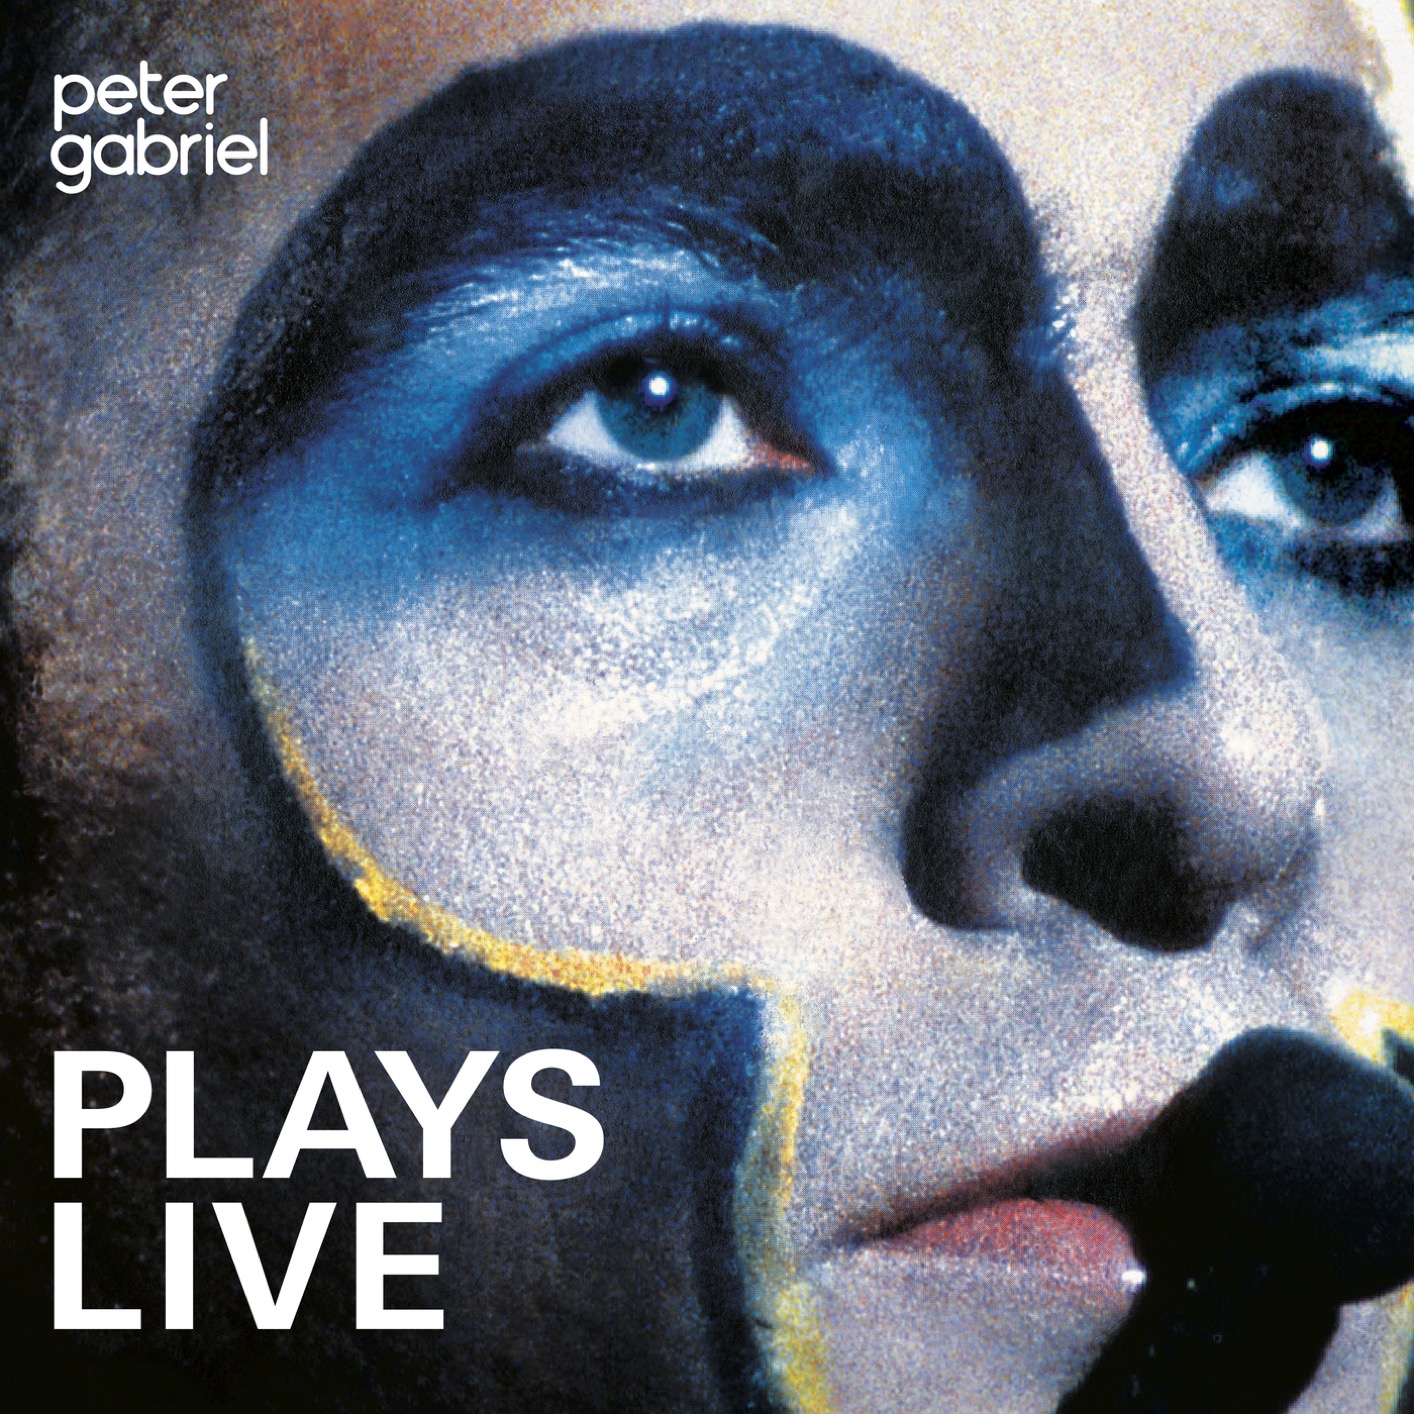 Peter Gabriel – Plays Live (Remastered) (1983/2019) [FLAC 24bit/96kHz]